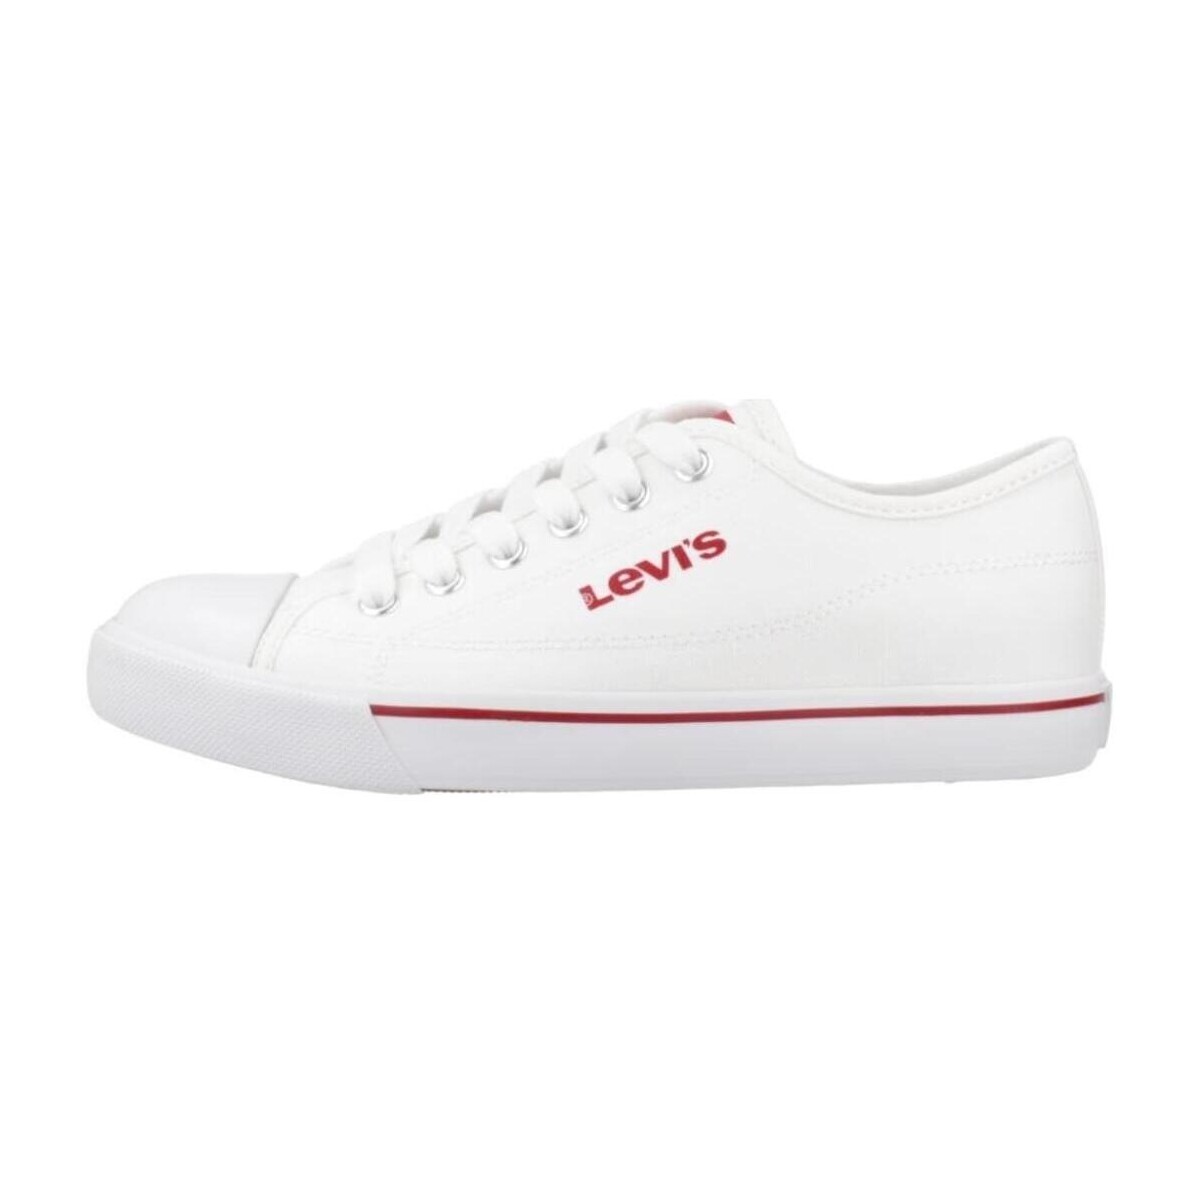 Scarpe Sneakers basse Levi's  Bianco